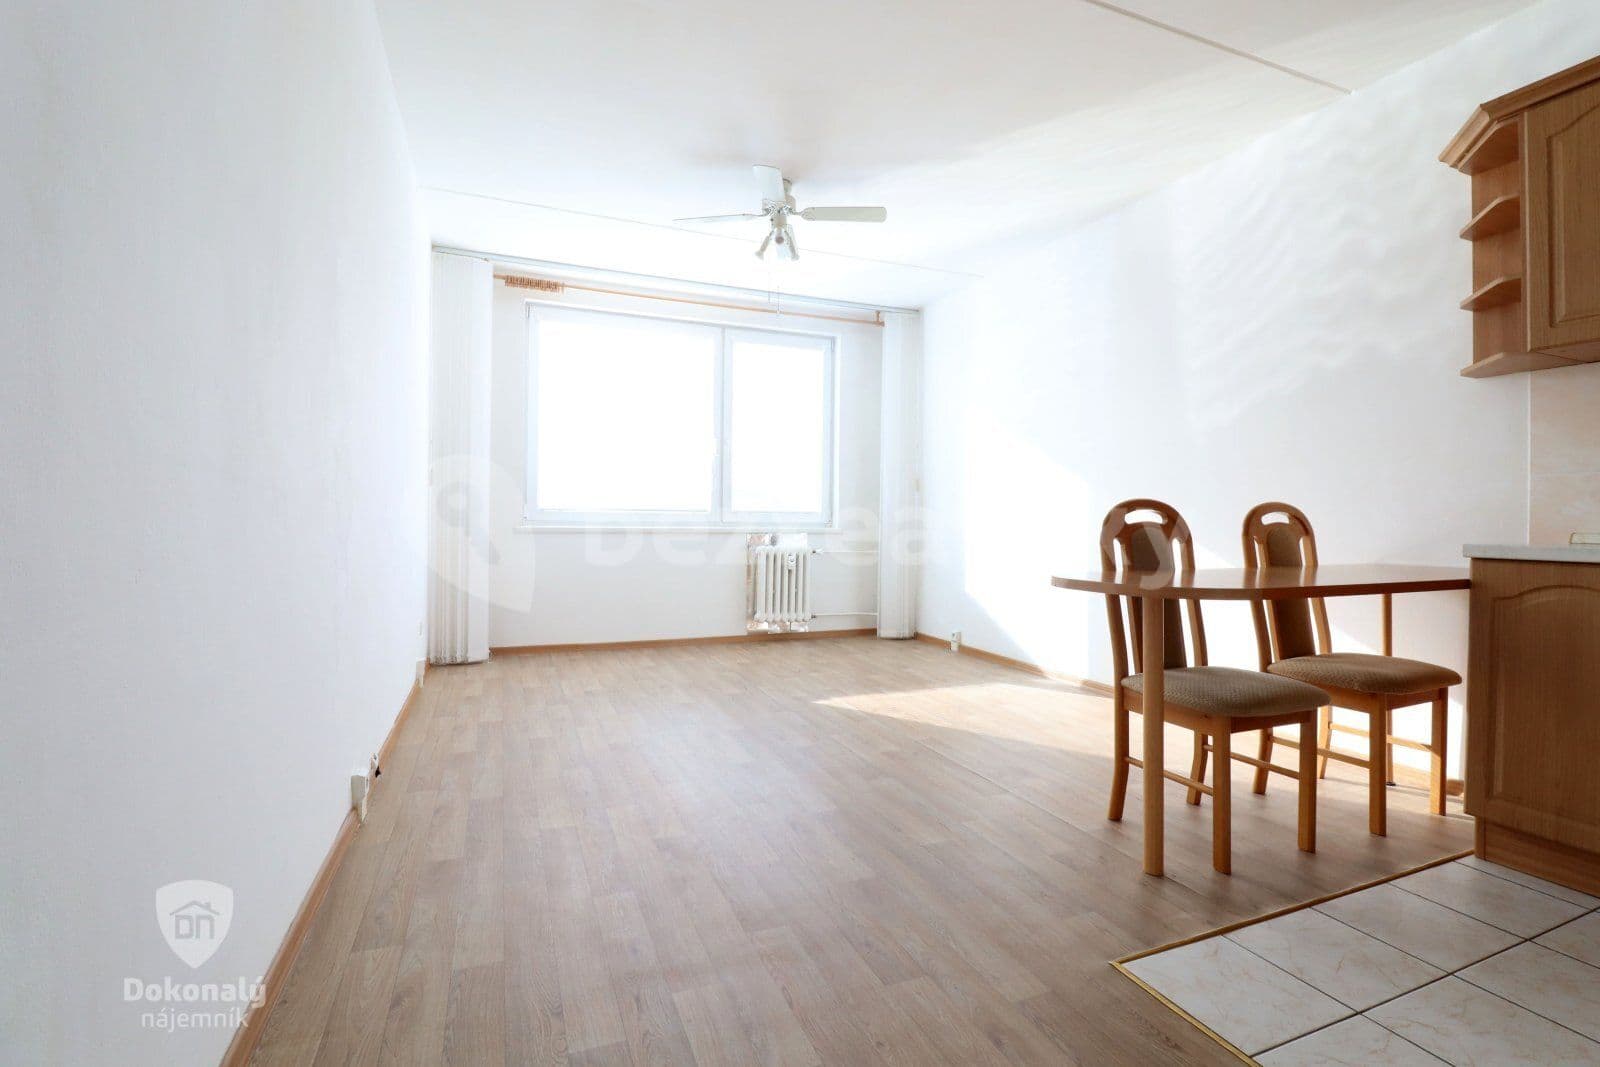 Studio flat to rent, 29 m², Semická, Prague, Prague